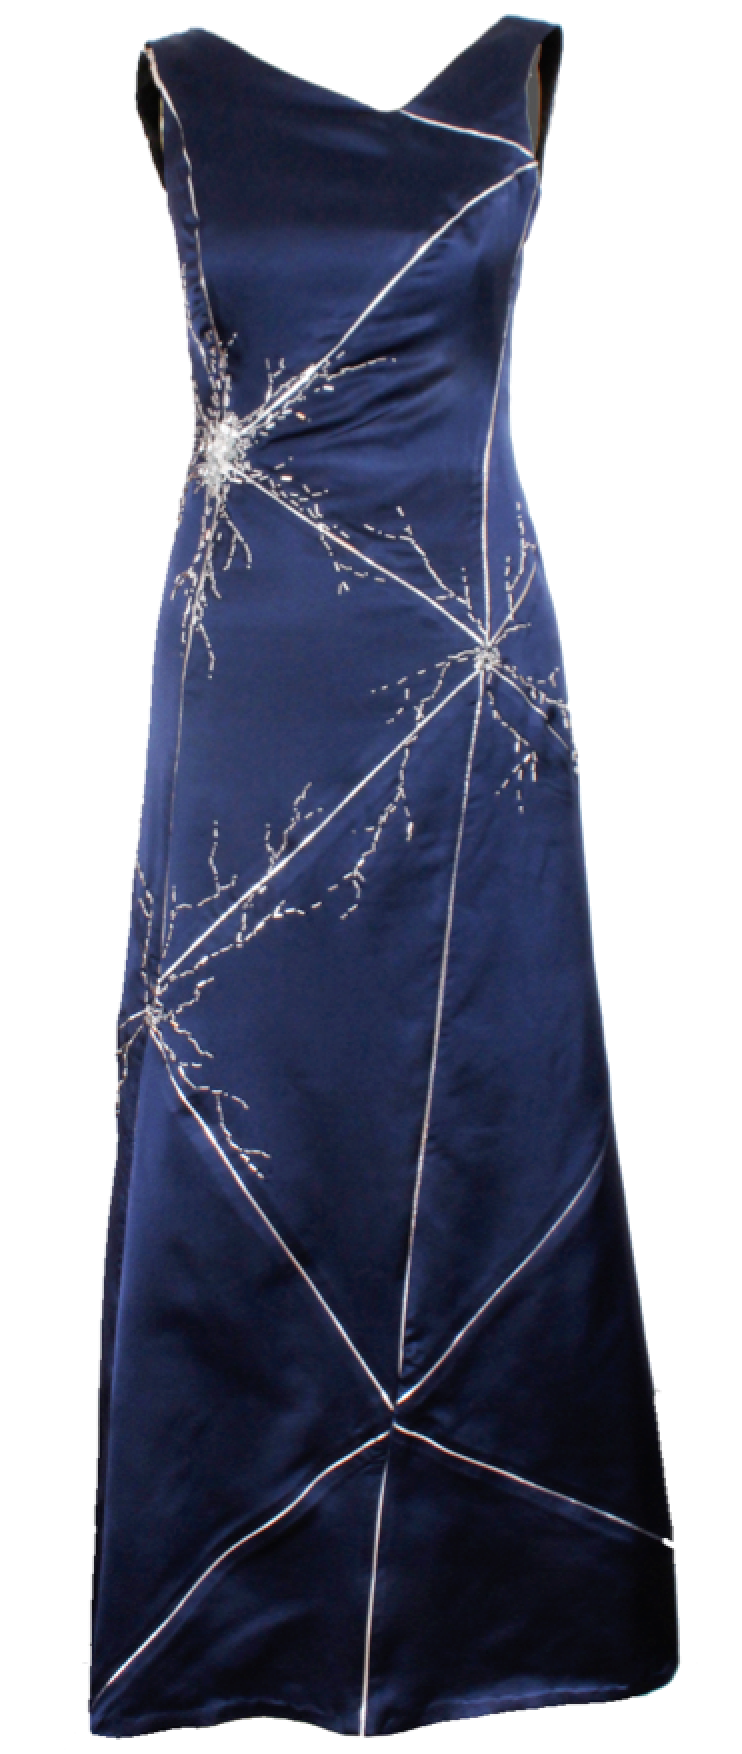 May Britt Moser's sample dress as designed by Matthew Hubble